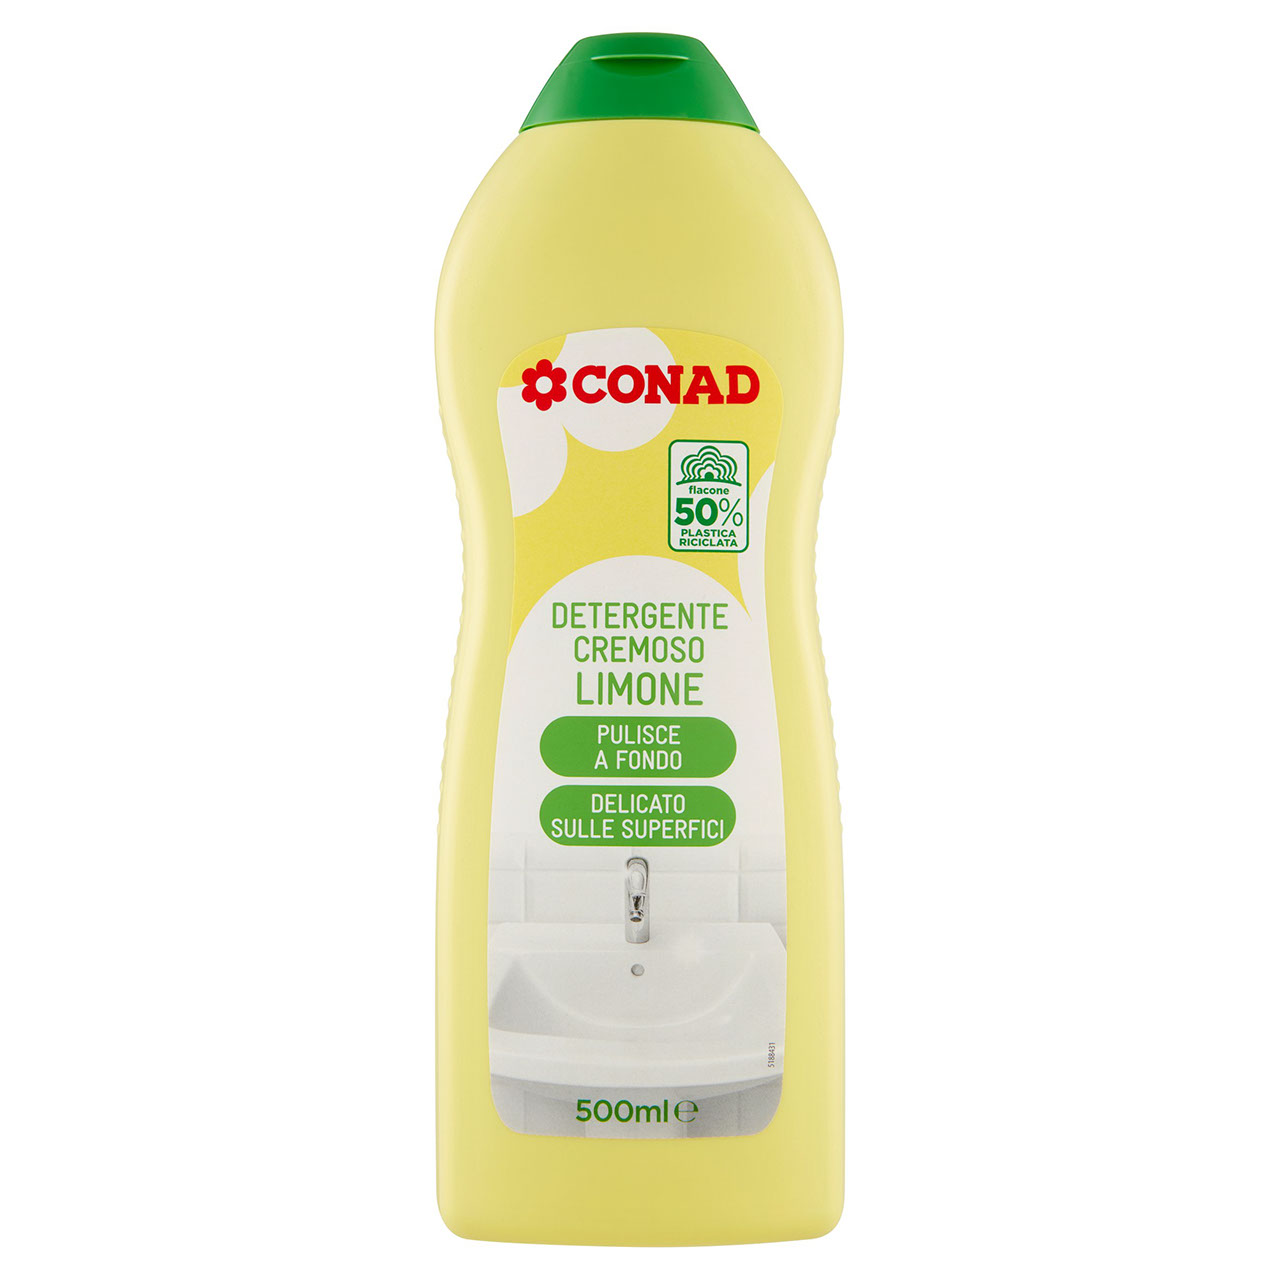 Detergente Cremoso Limone 500 ml Conad